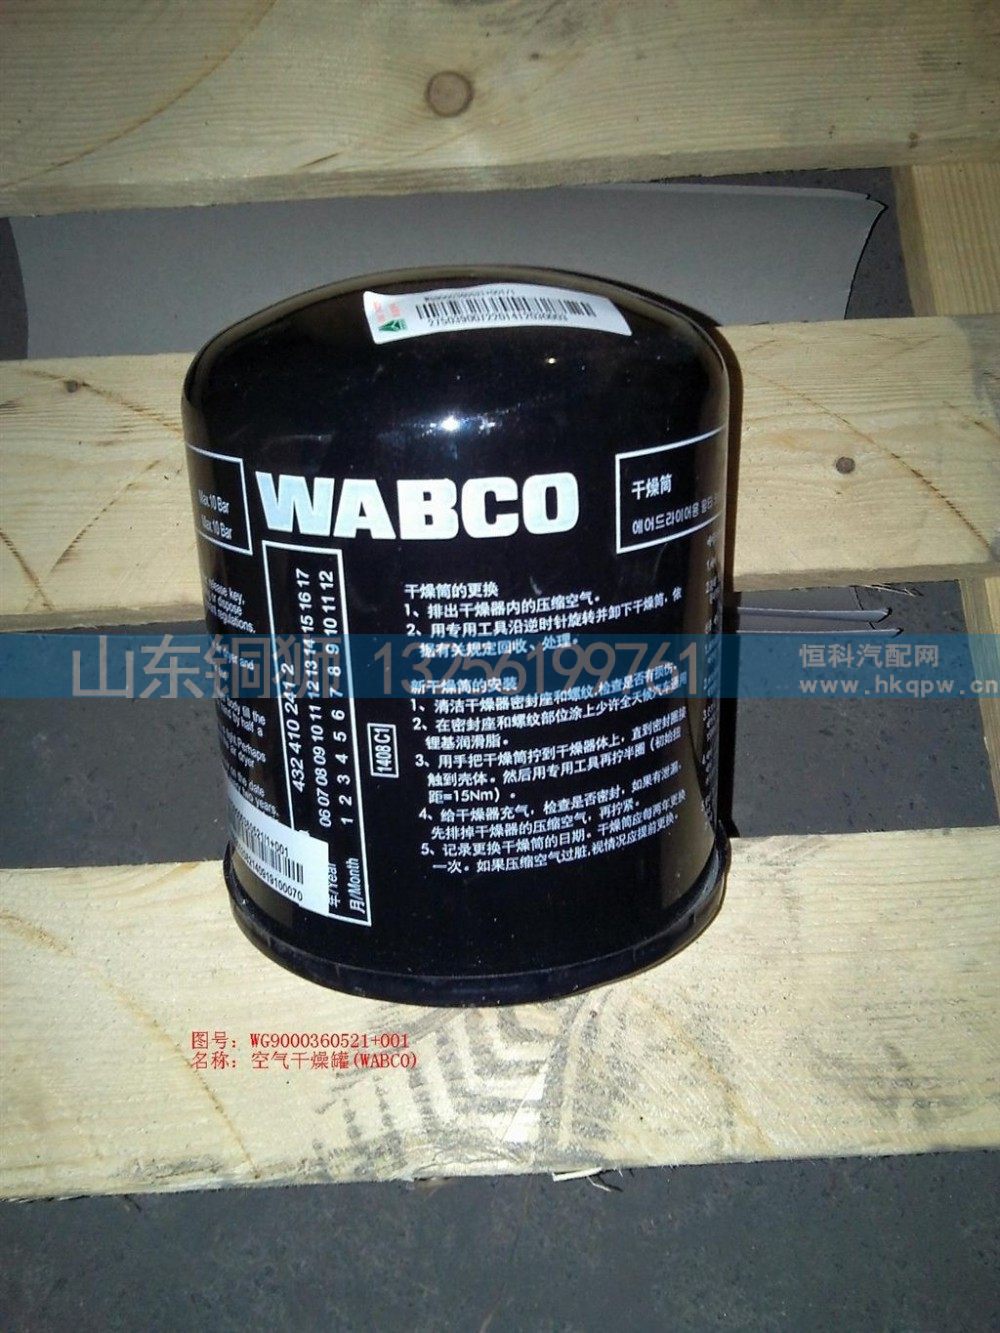 WG9000360521+001,干燥器银罐,山东铜狮汽车零部件有限公司